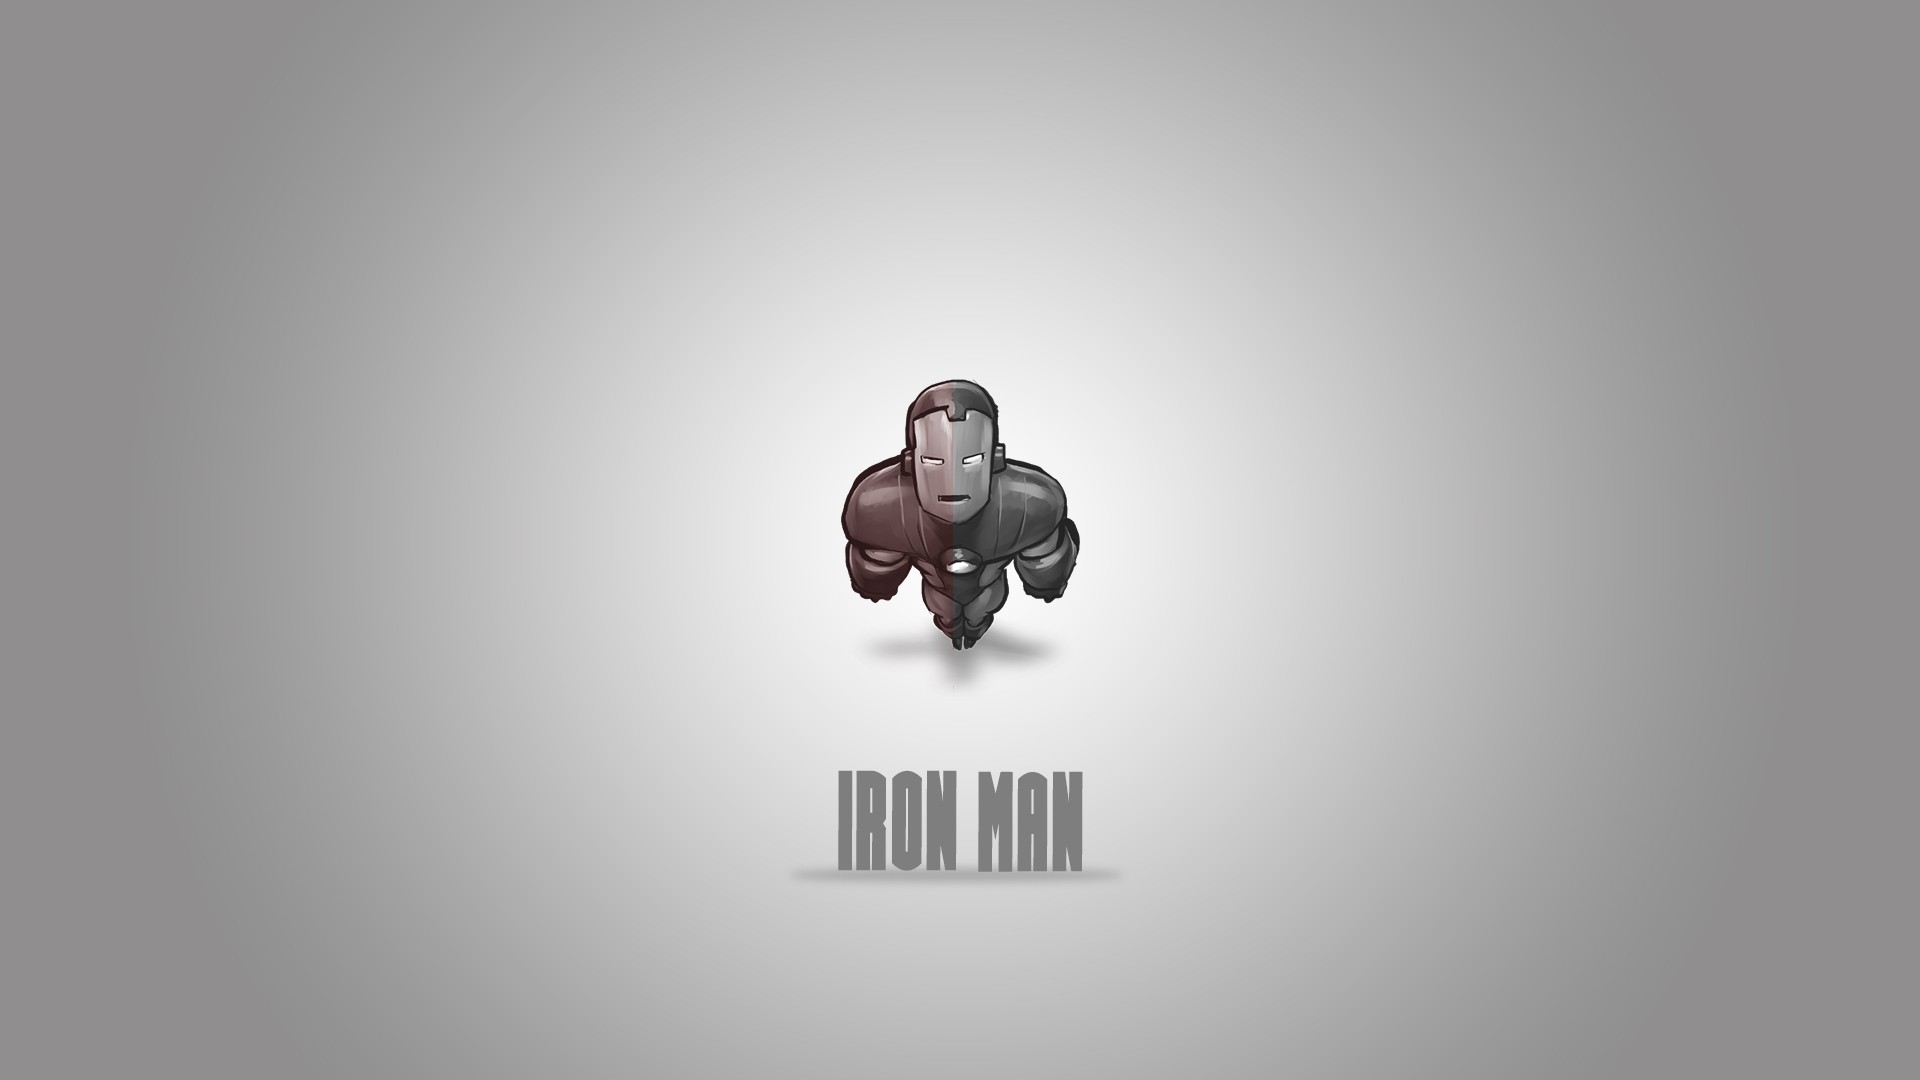 General 1920x1080 Iron Man cartoon minimalism artwork Marvel Comics gradient simple background gray background